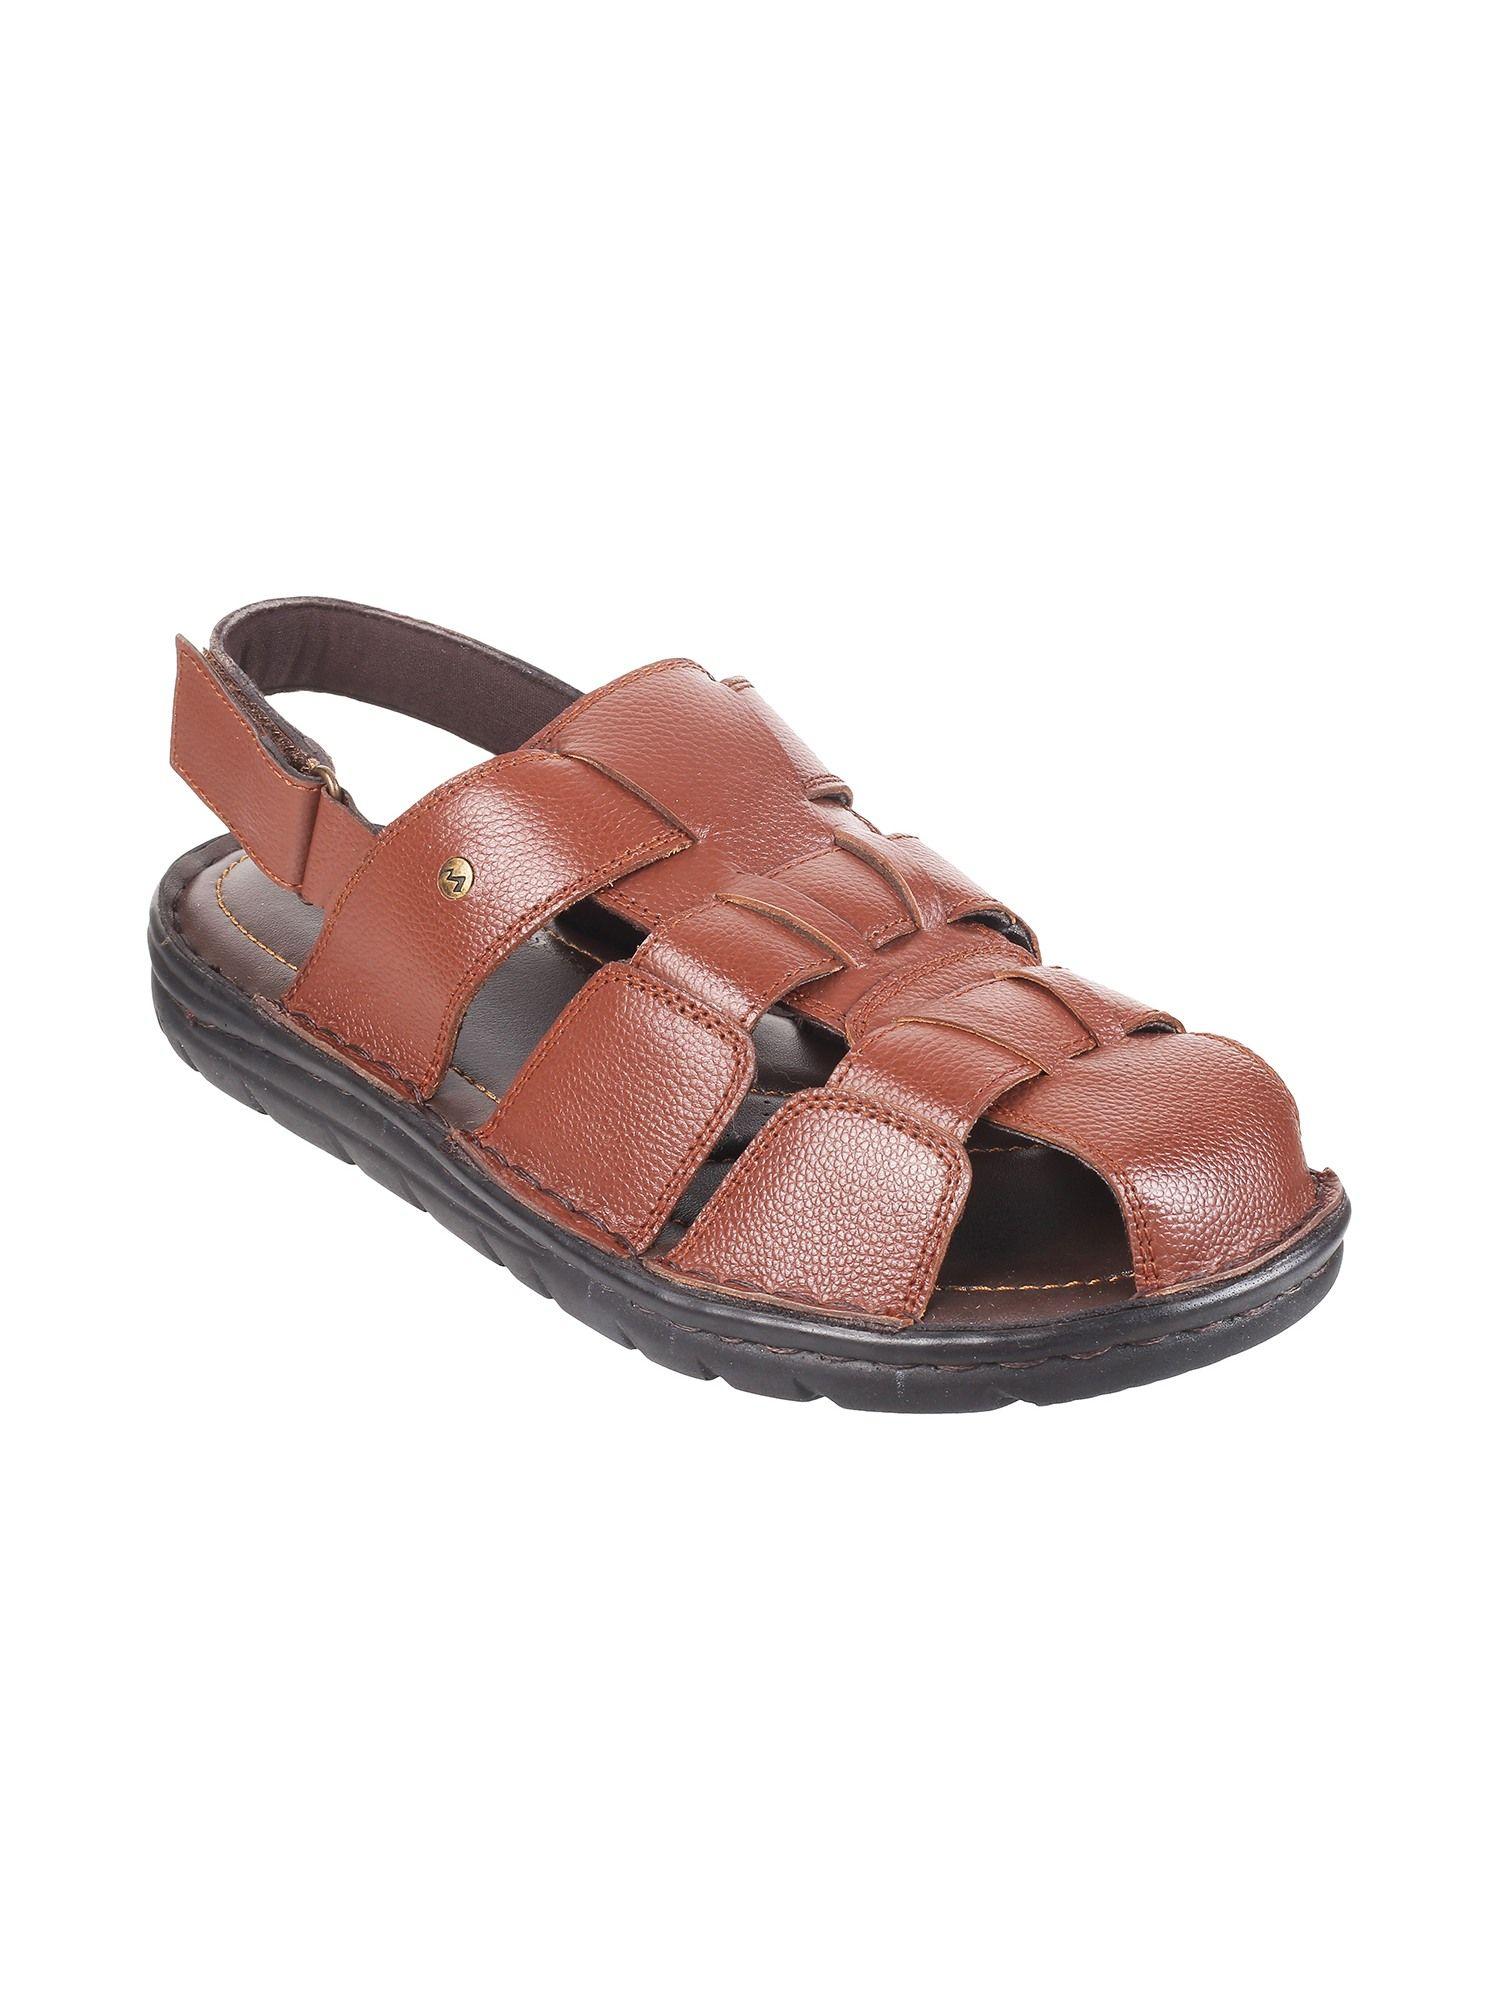 mens-brown-flat-casual-sandalsmetro-men-brown-leather-sandals